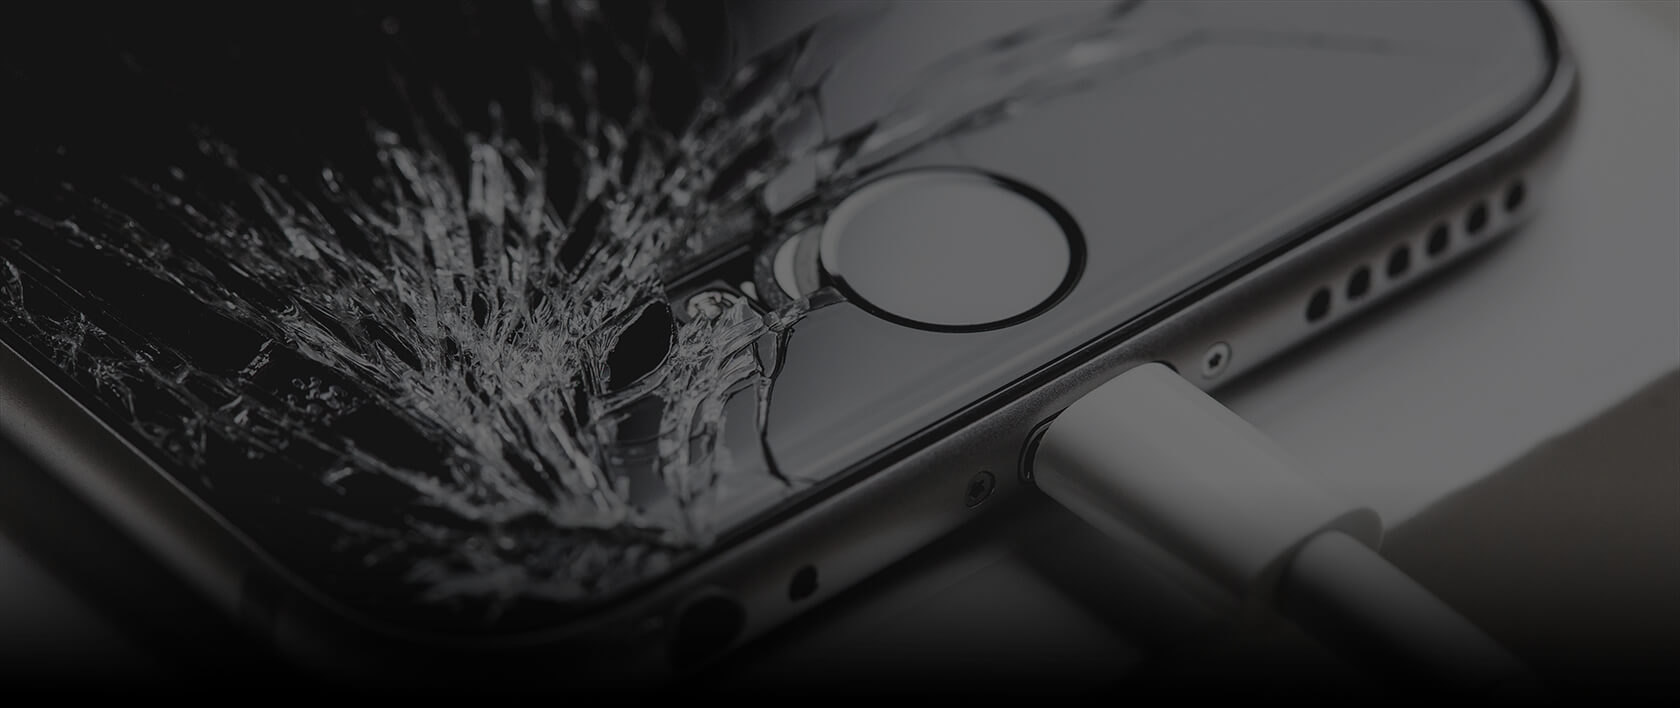 MyTechWorld - Macbook Repair, iPhone Repair and iPad Repair